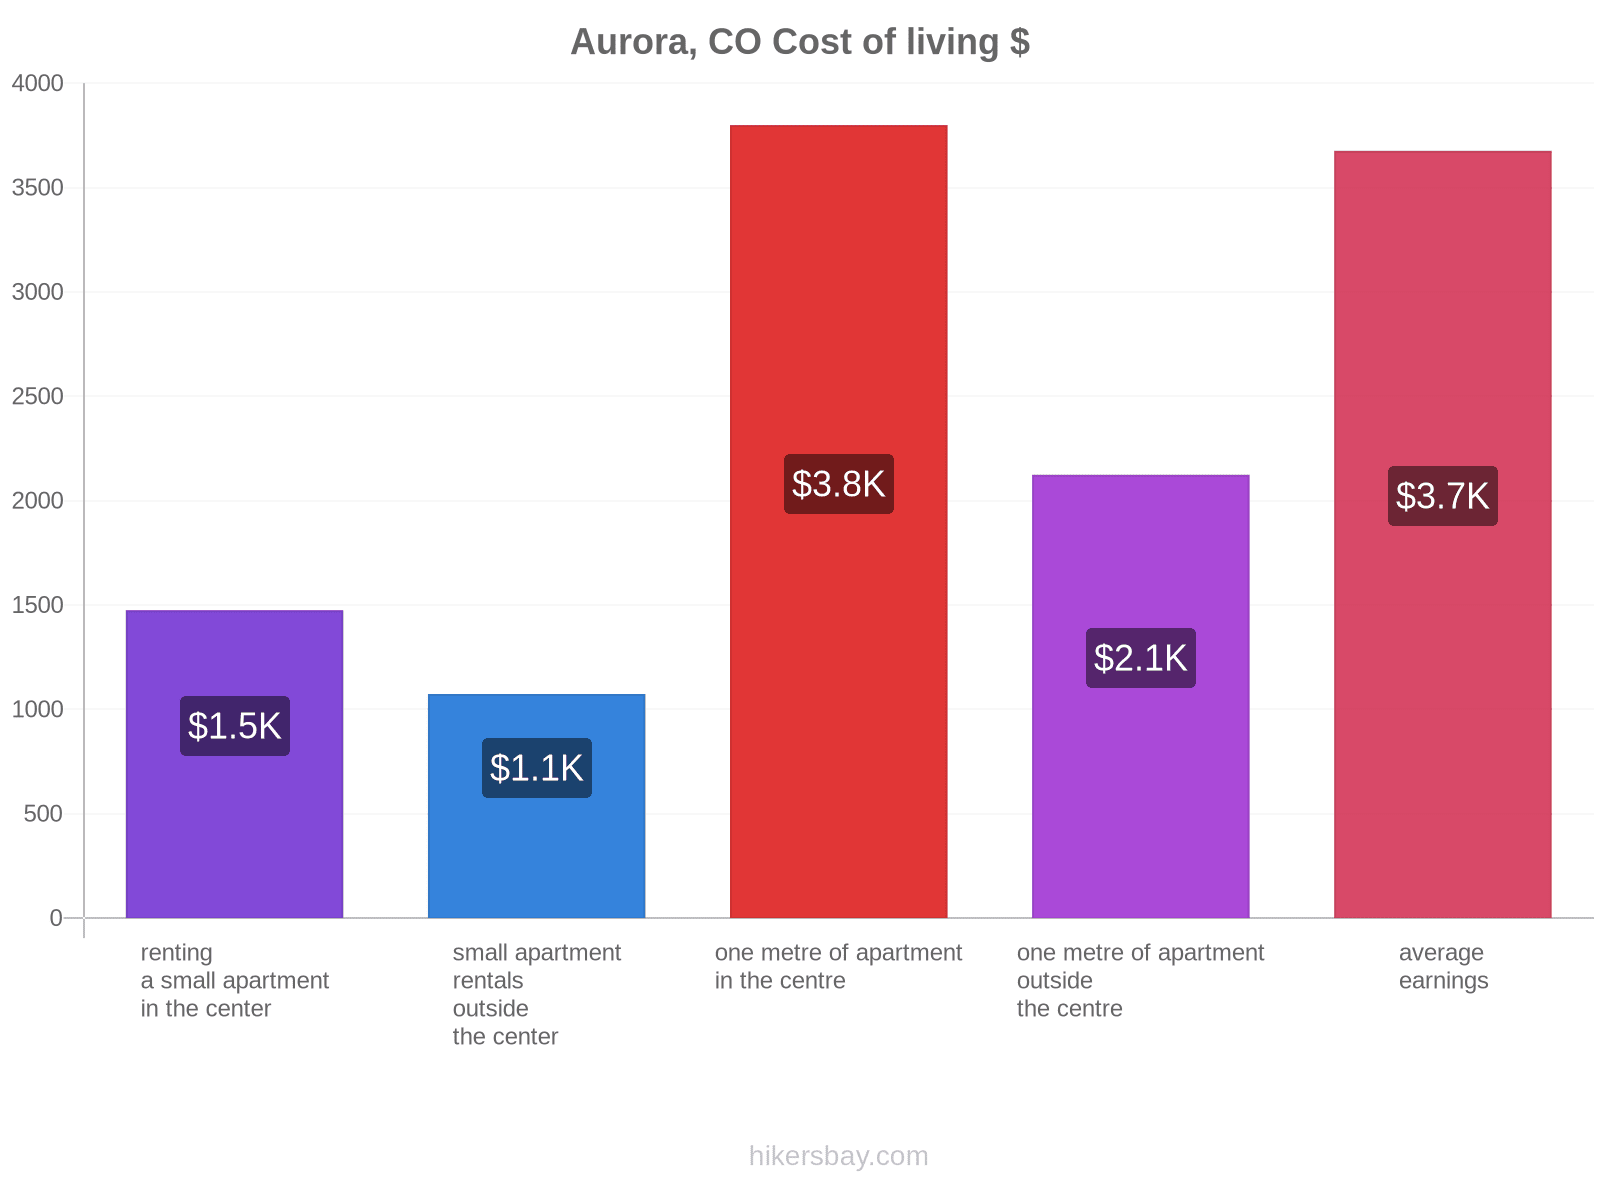 Aurora, CO cost of living hikersbay.com